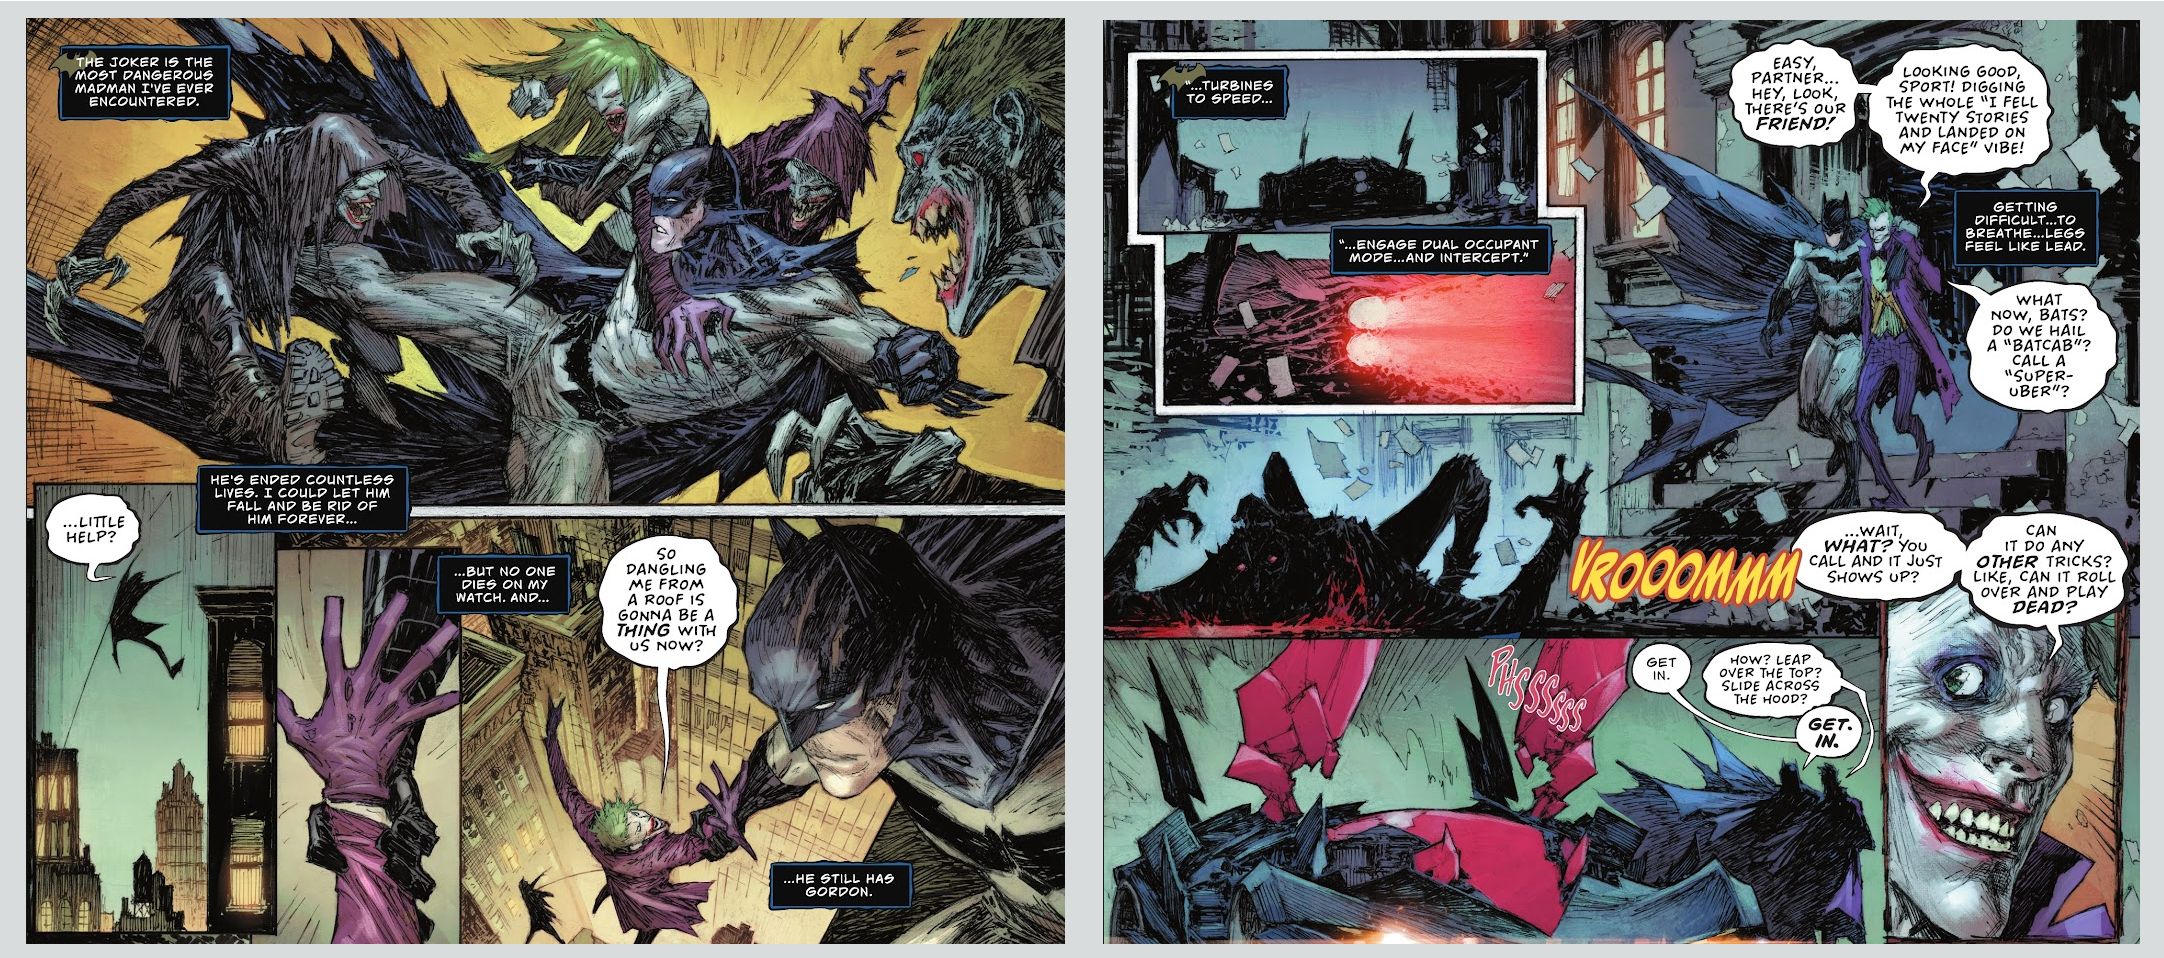 Batman salva Joker ao custo da vida de um inimigo.